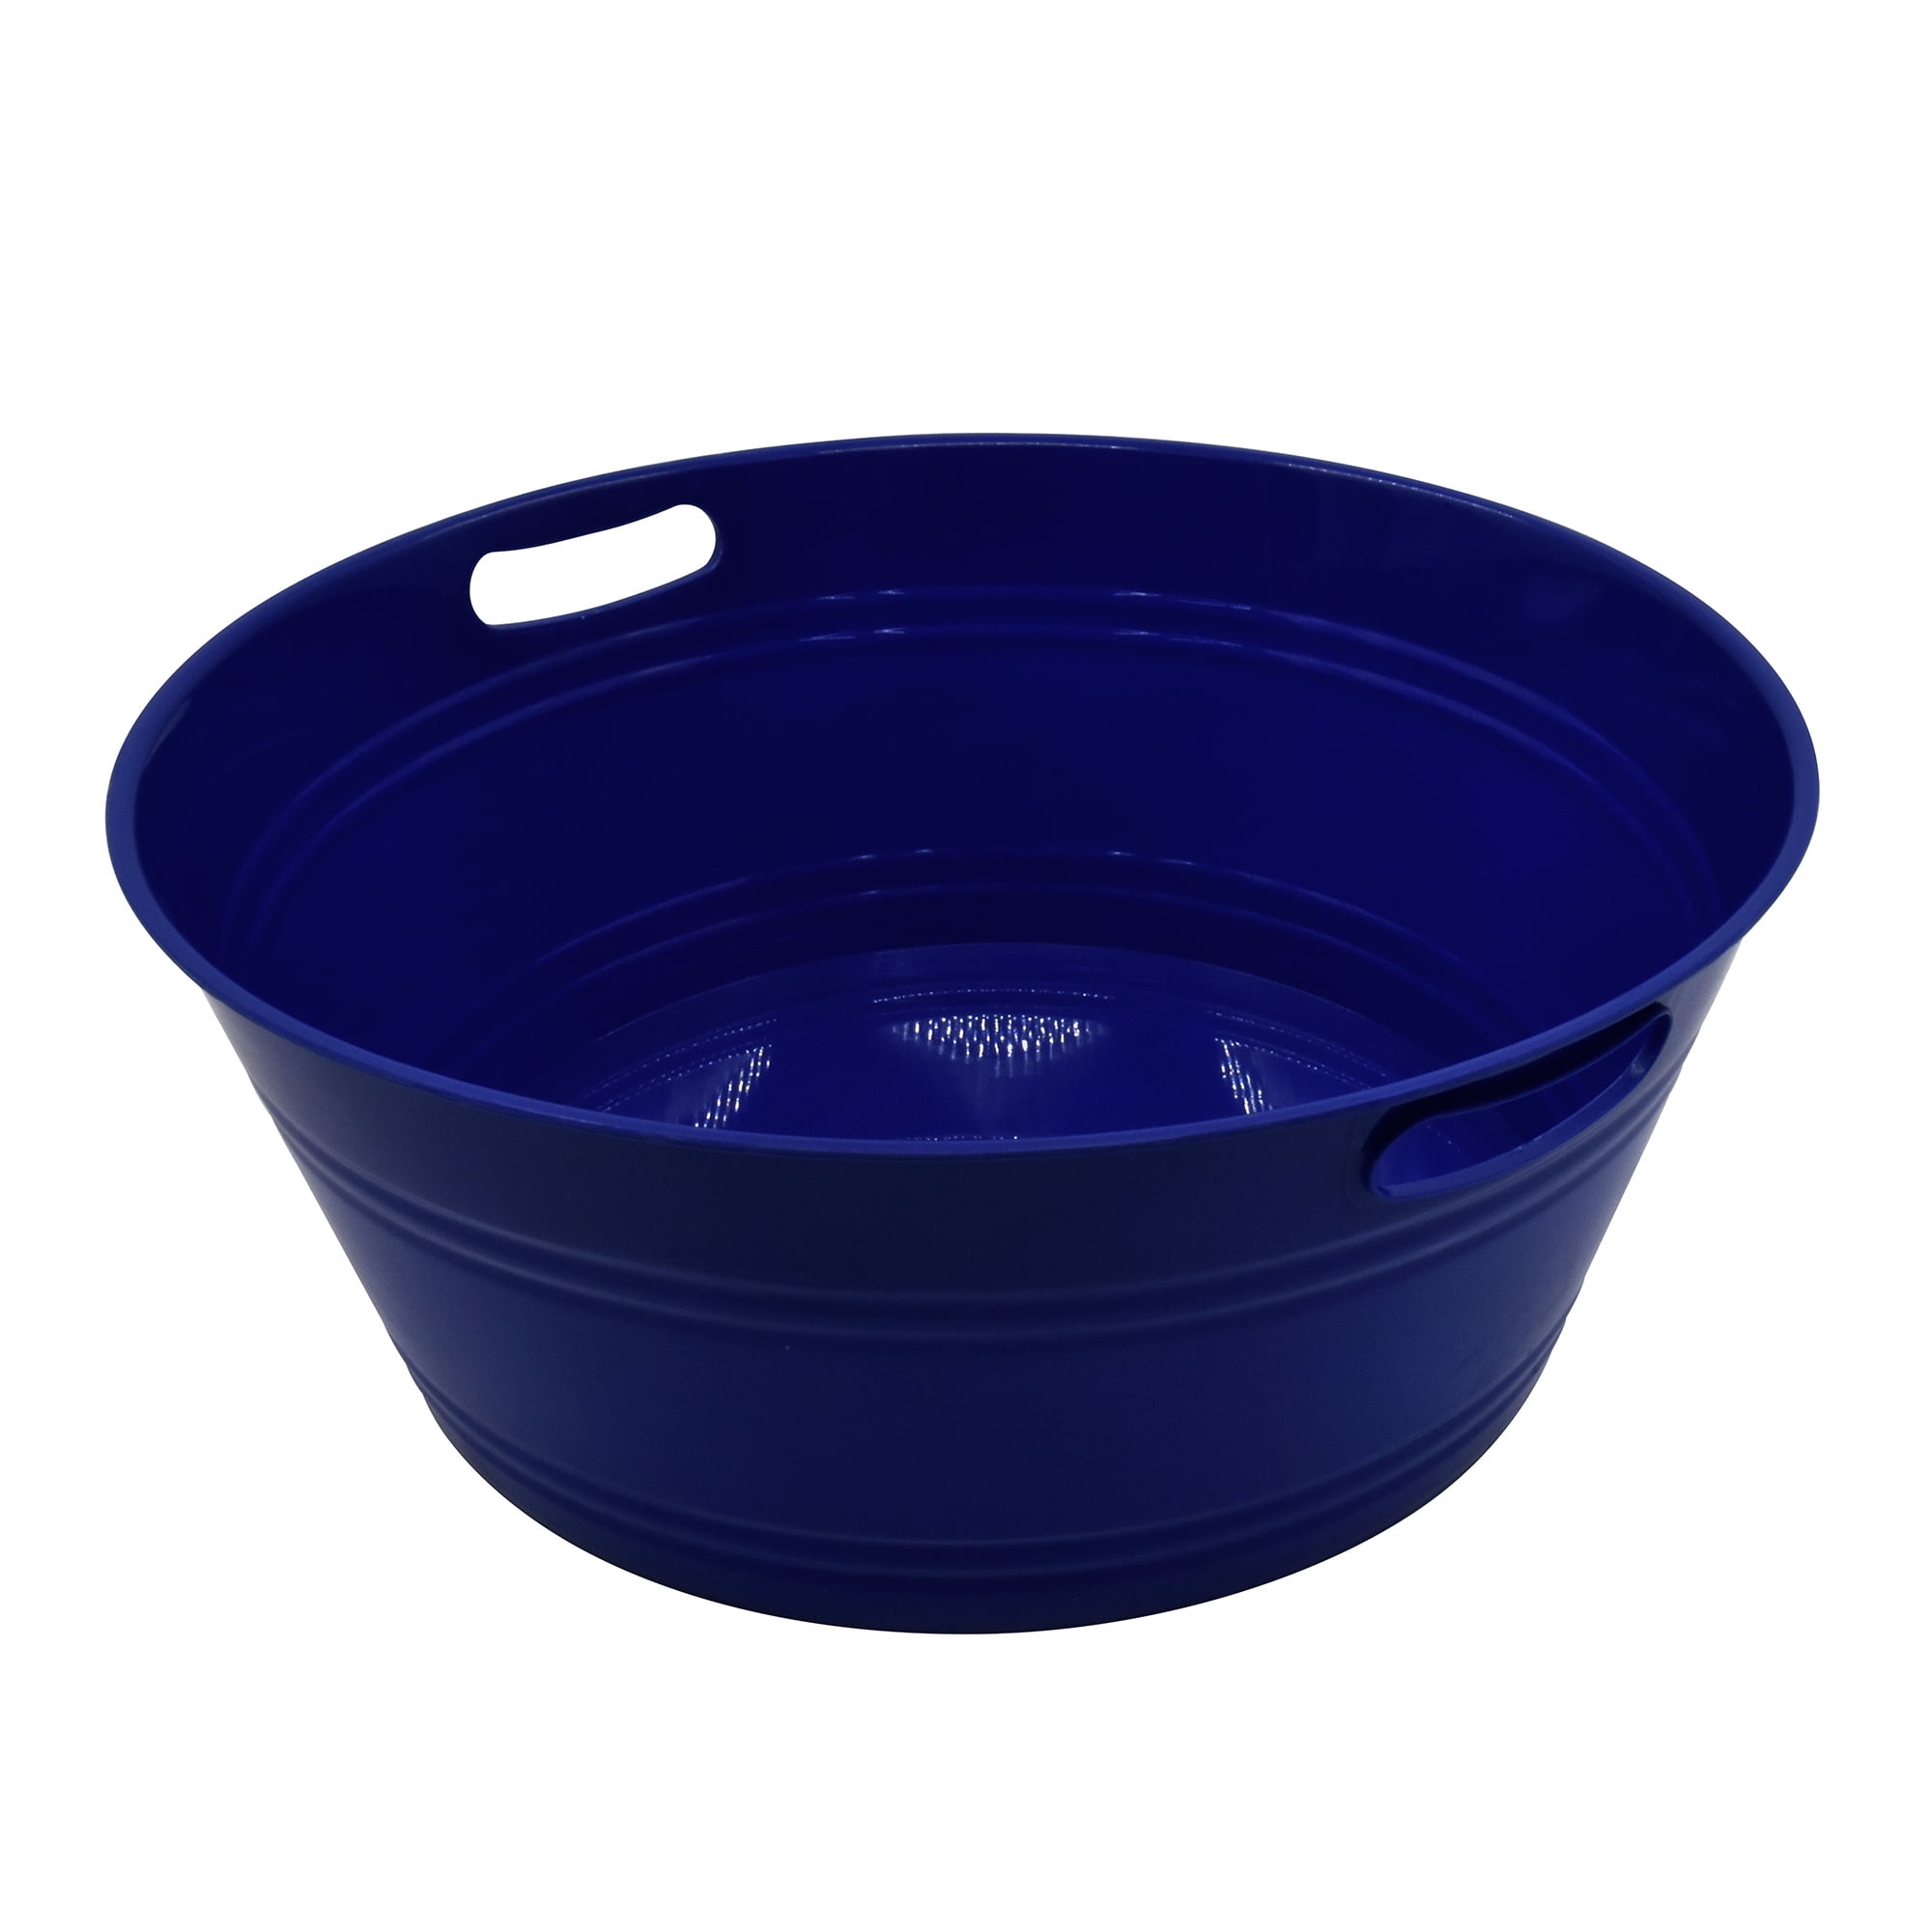 Plastic Handy Tub Oval Blue - Dollar Store